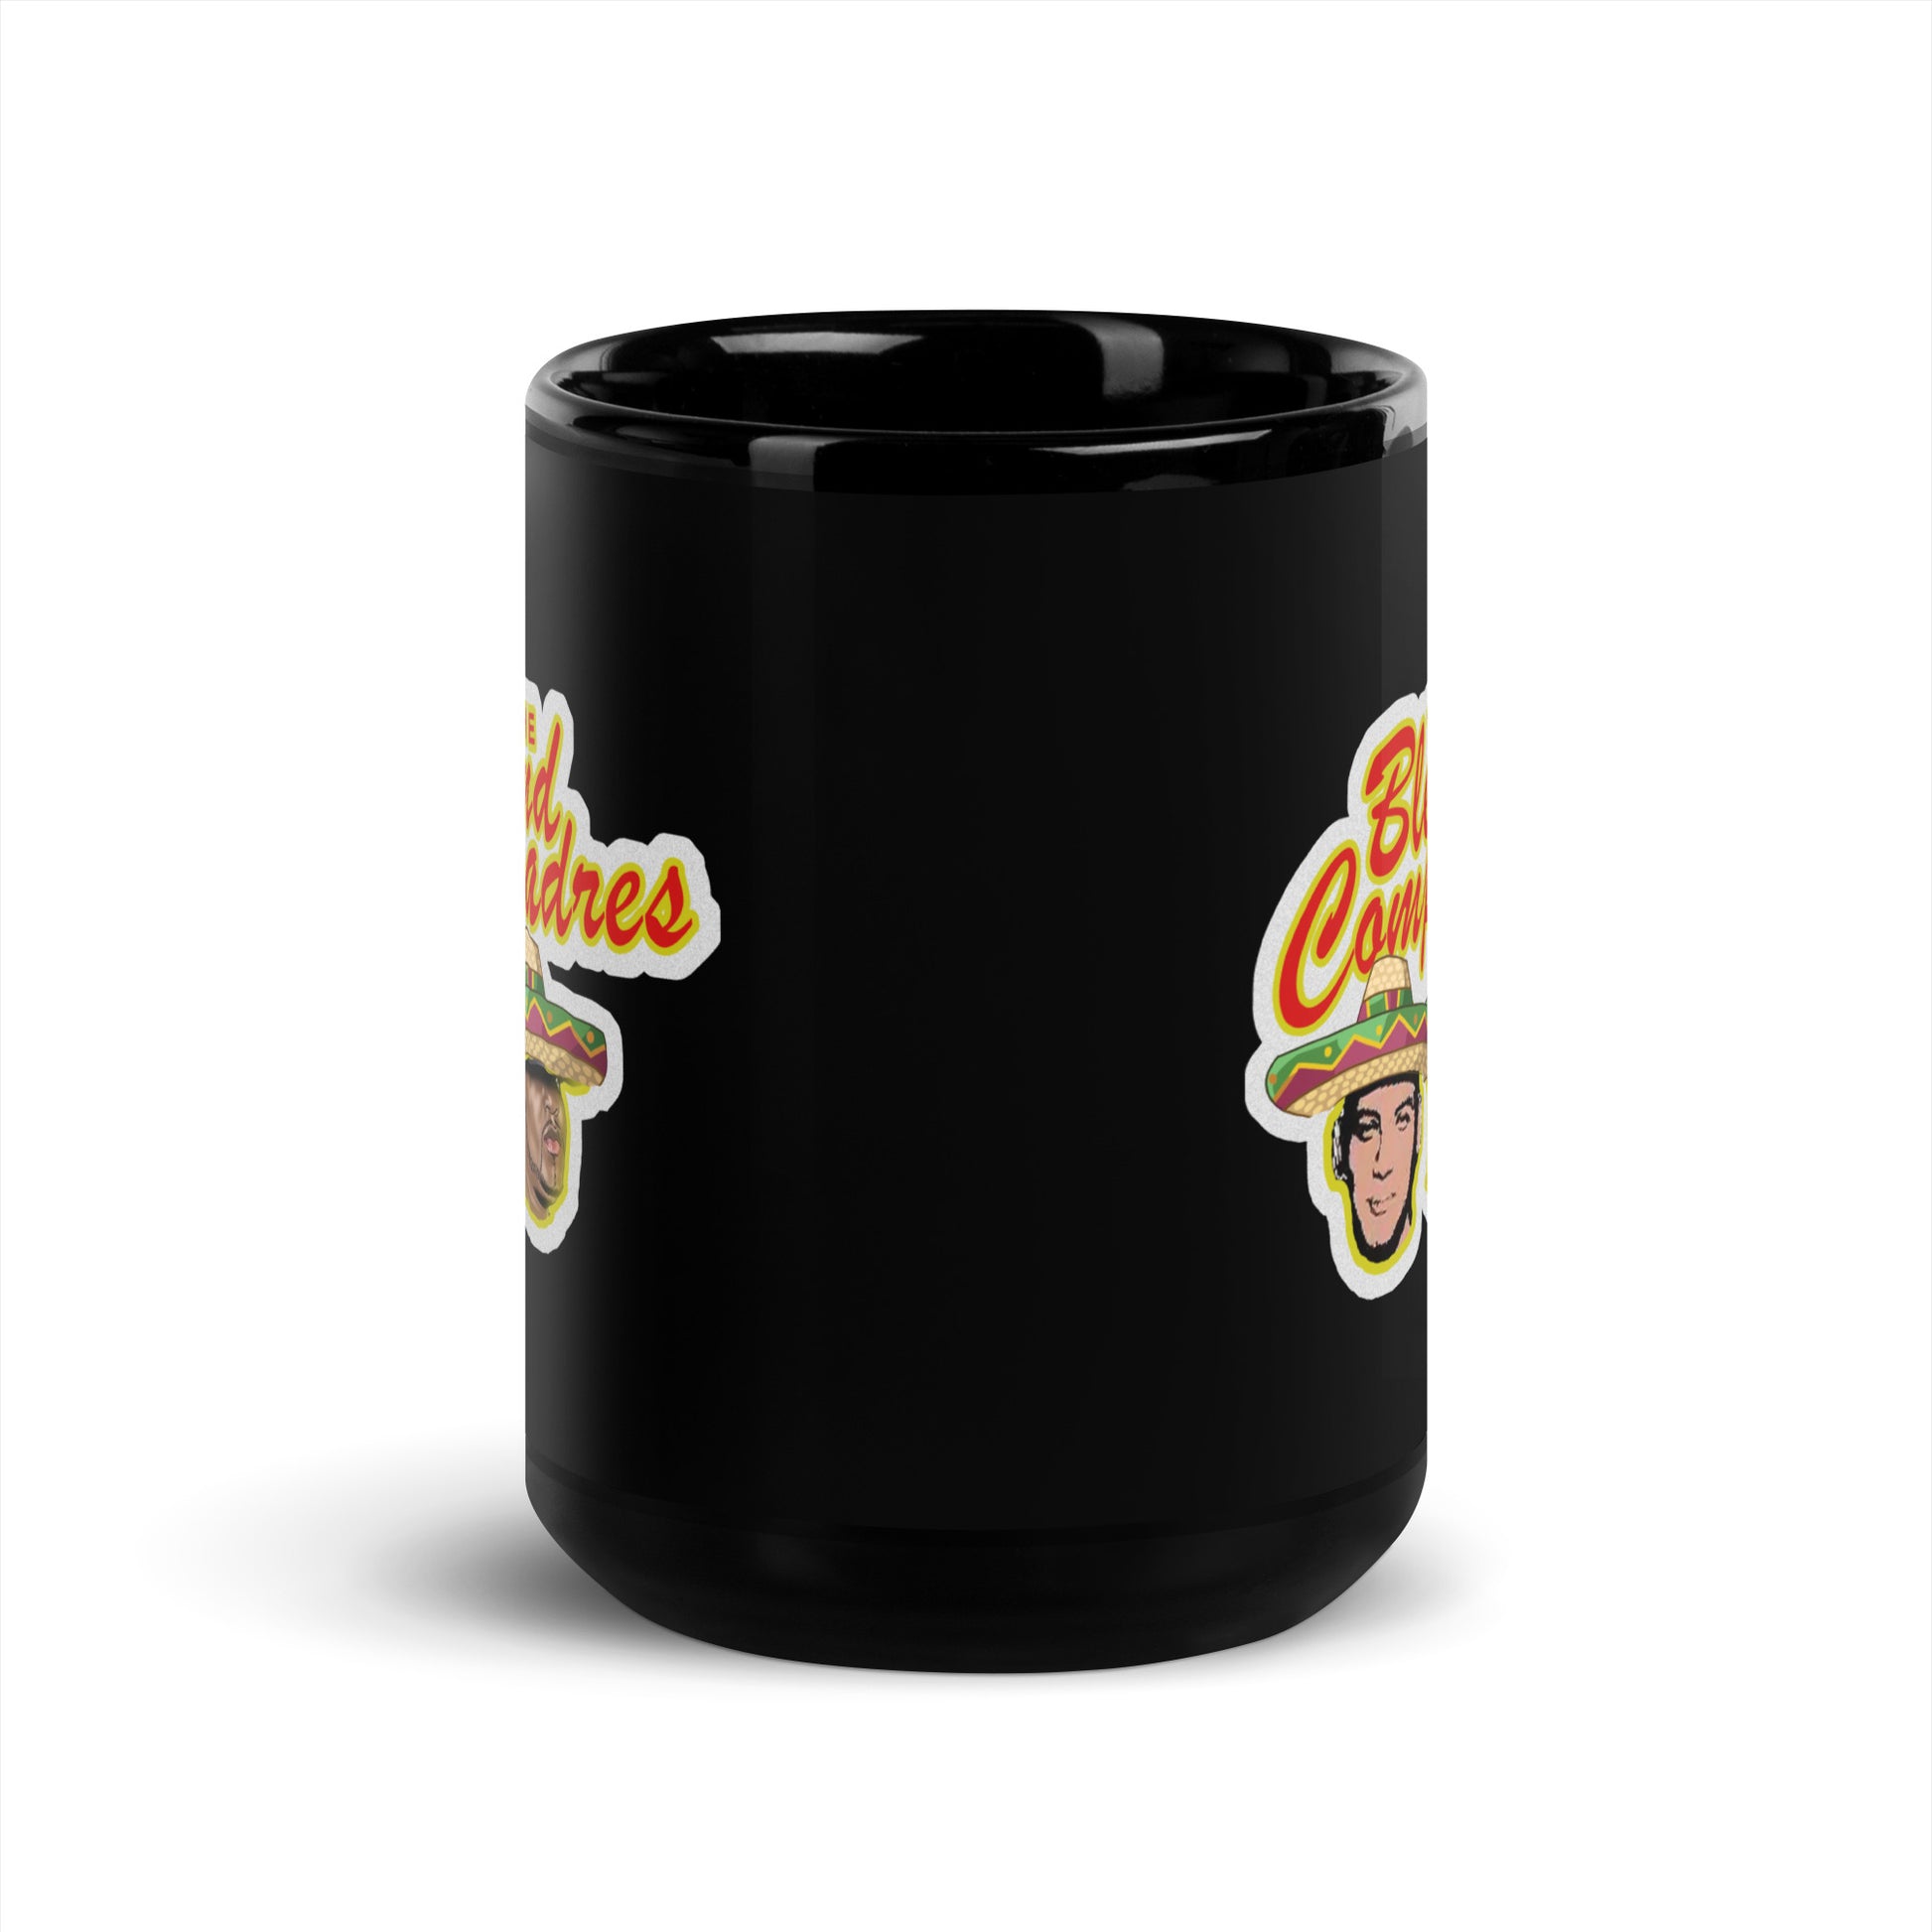 The Blend Compdres Black Glossy Mug - Another Bodega